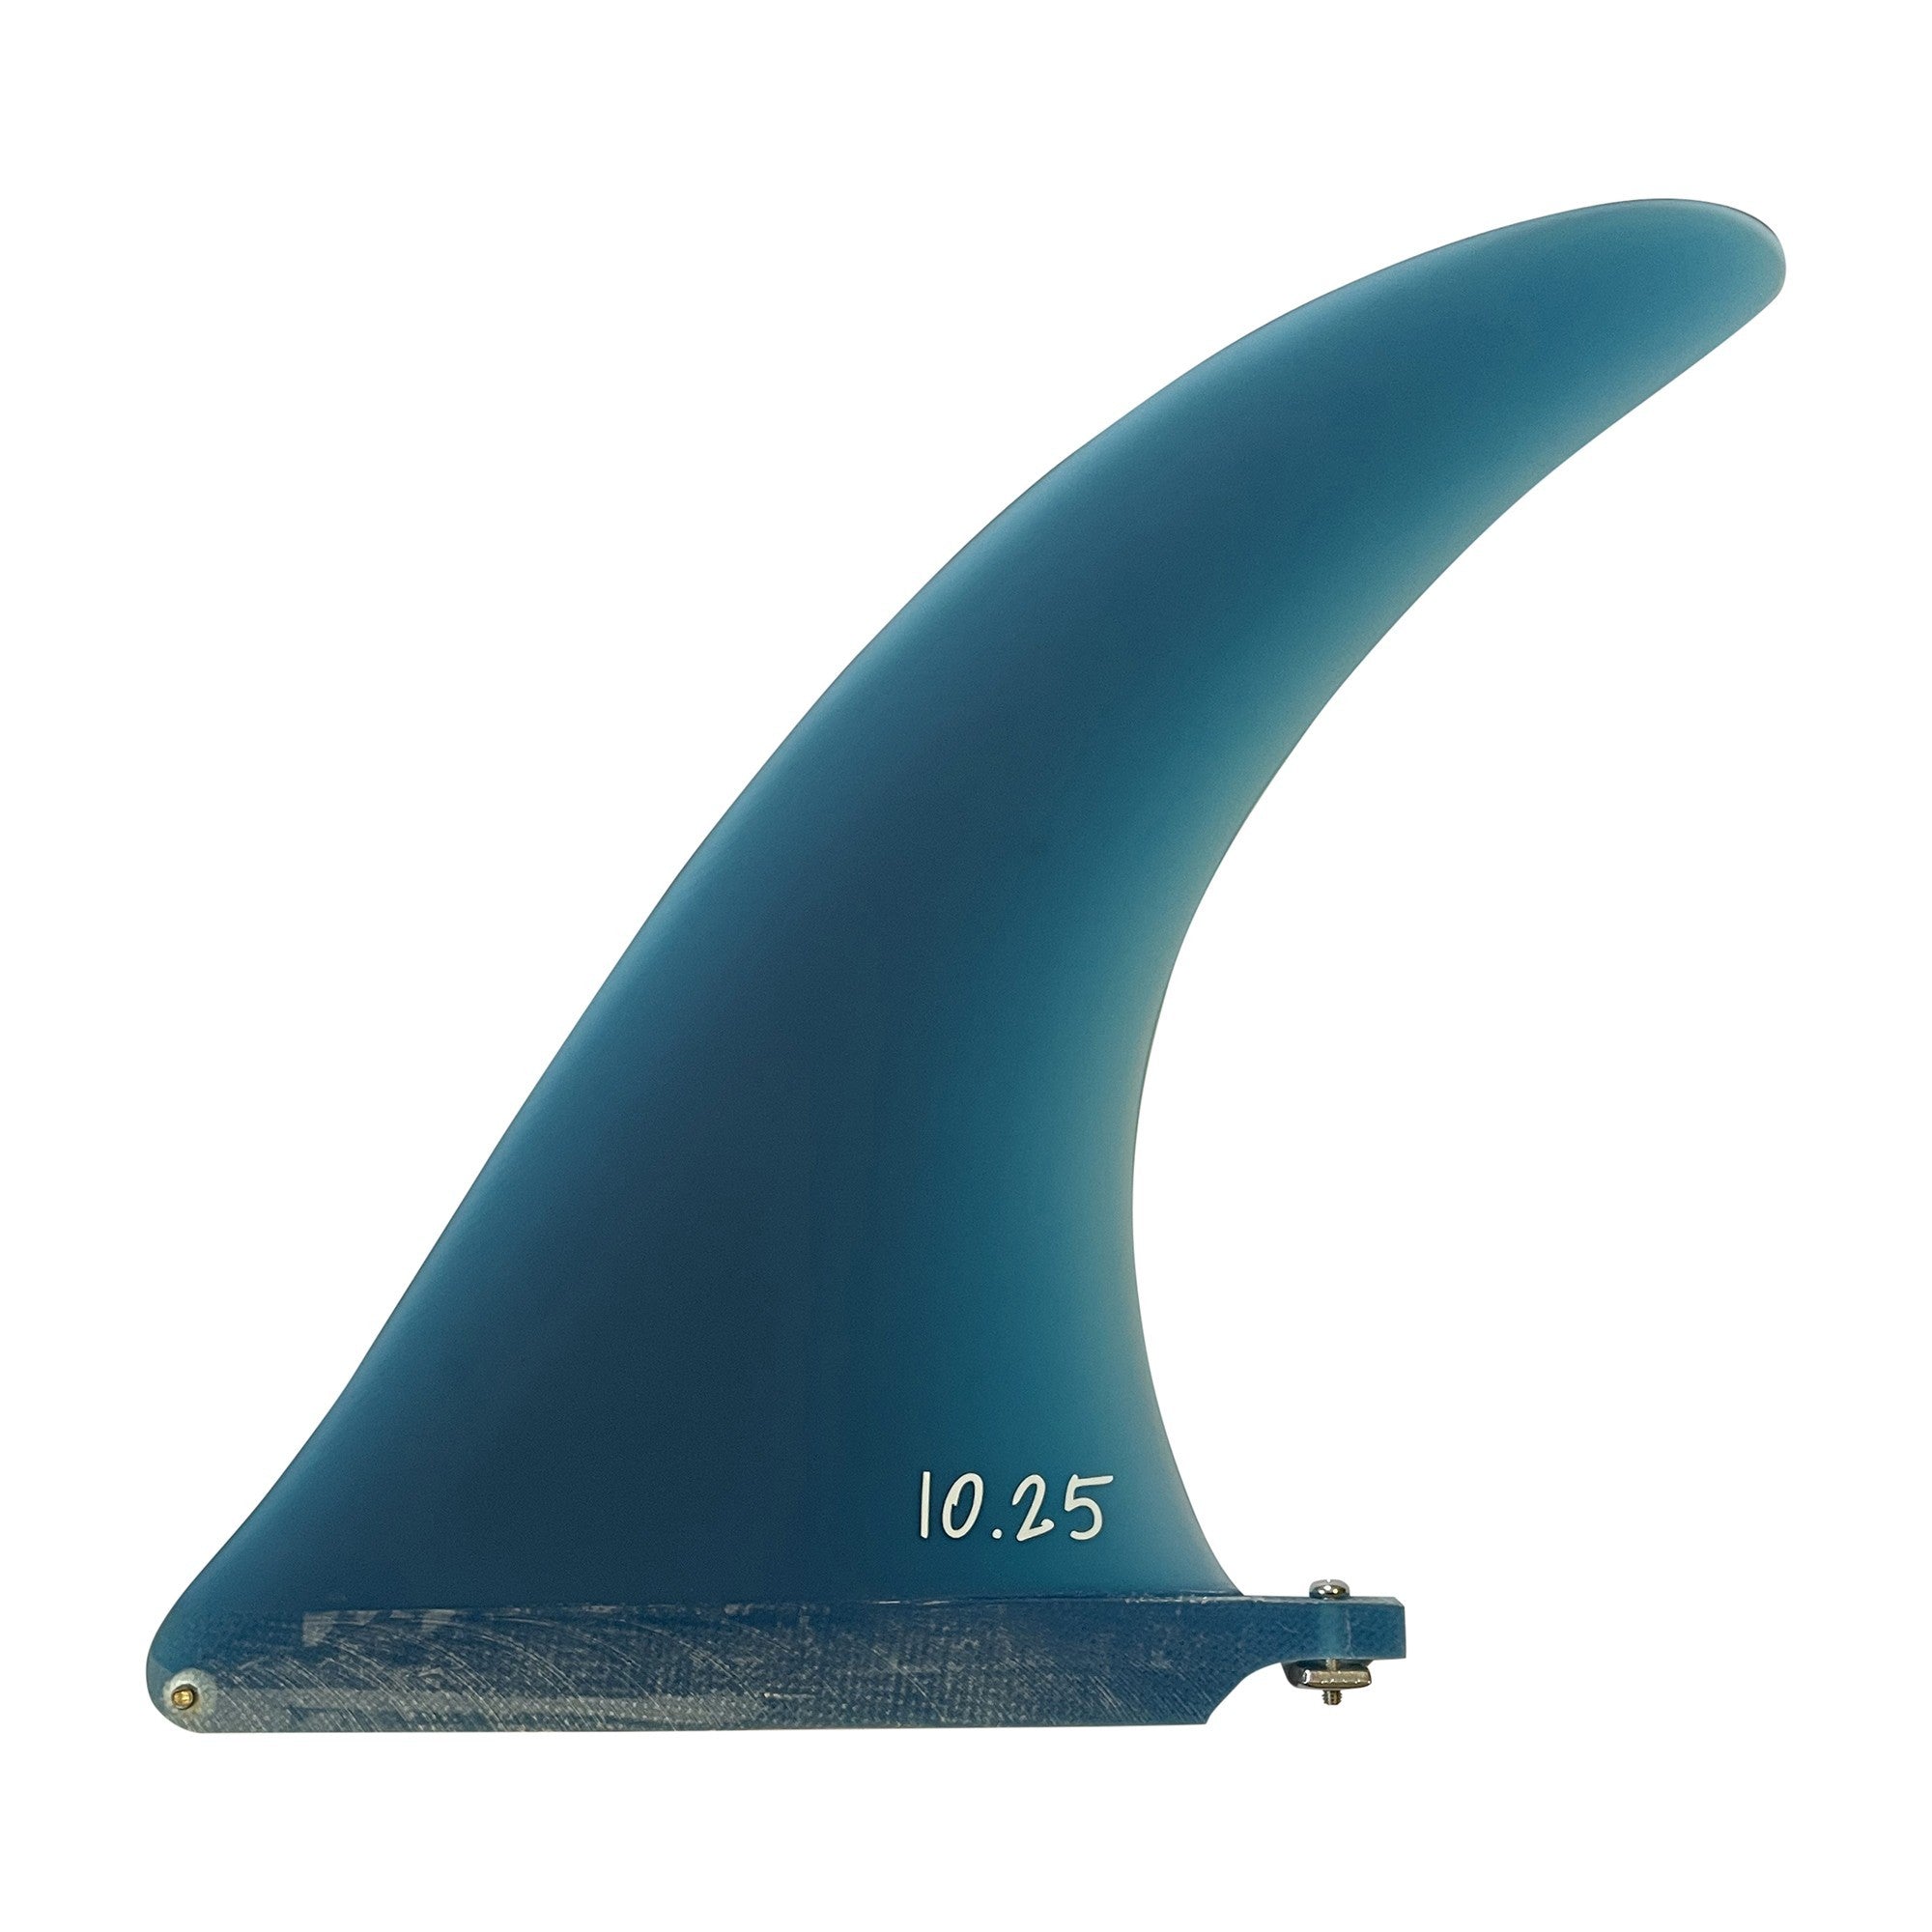 SISTEMA DE SURF - Aleta única de fibra de vidrio Dolphin (caja de EE. UU.) - 9.75" - Azul